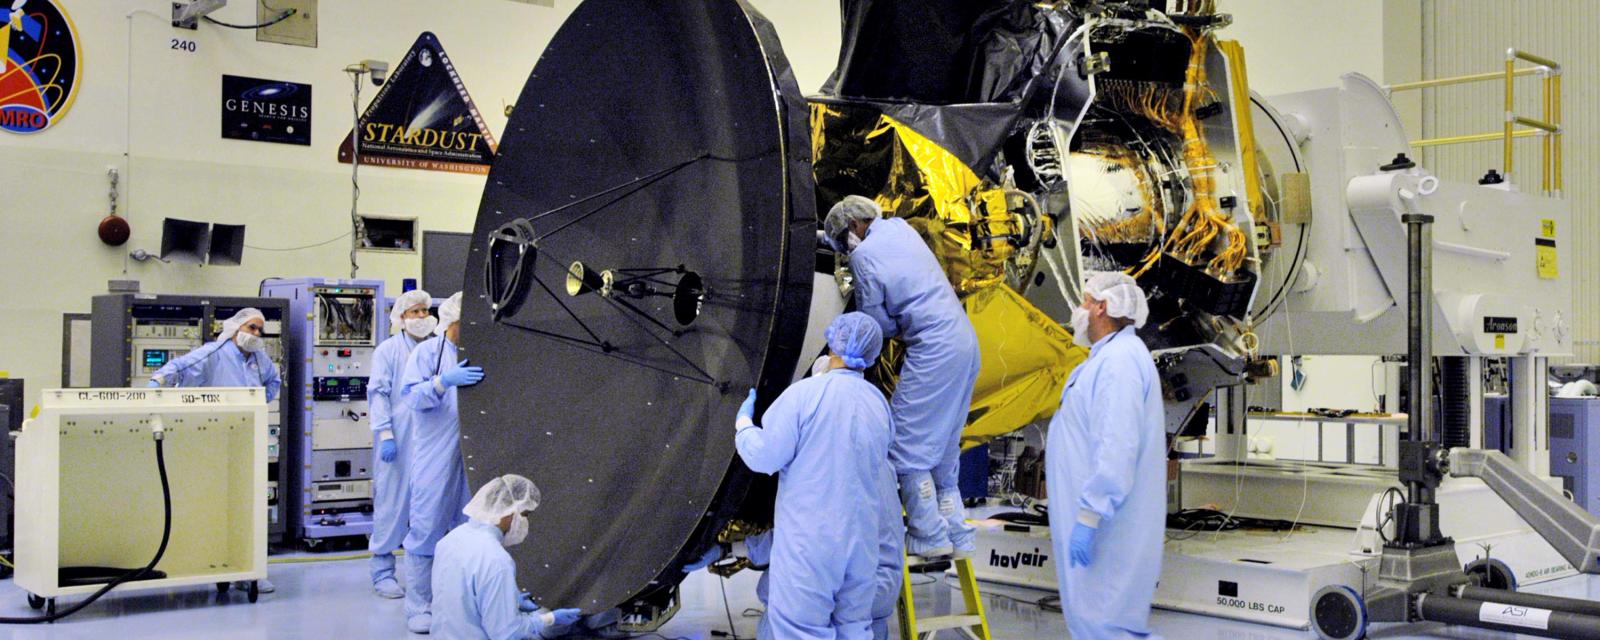 NASA scientists put together the Mars Reconnaissance Orbiter